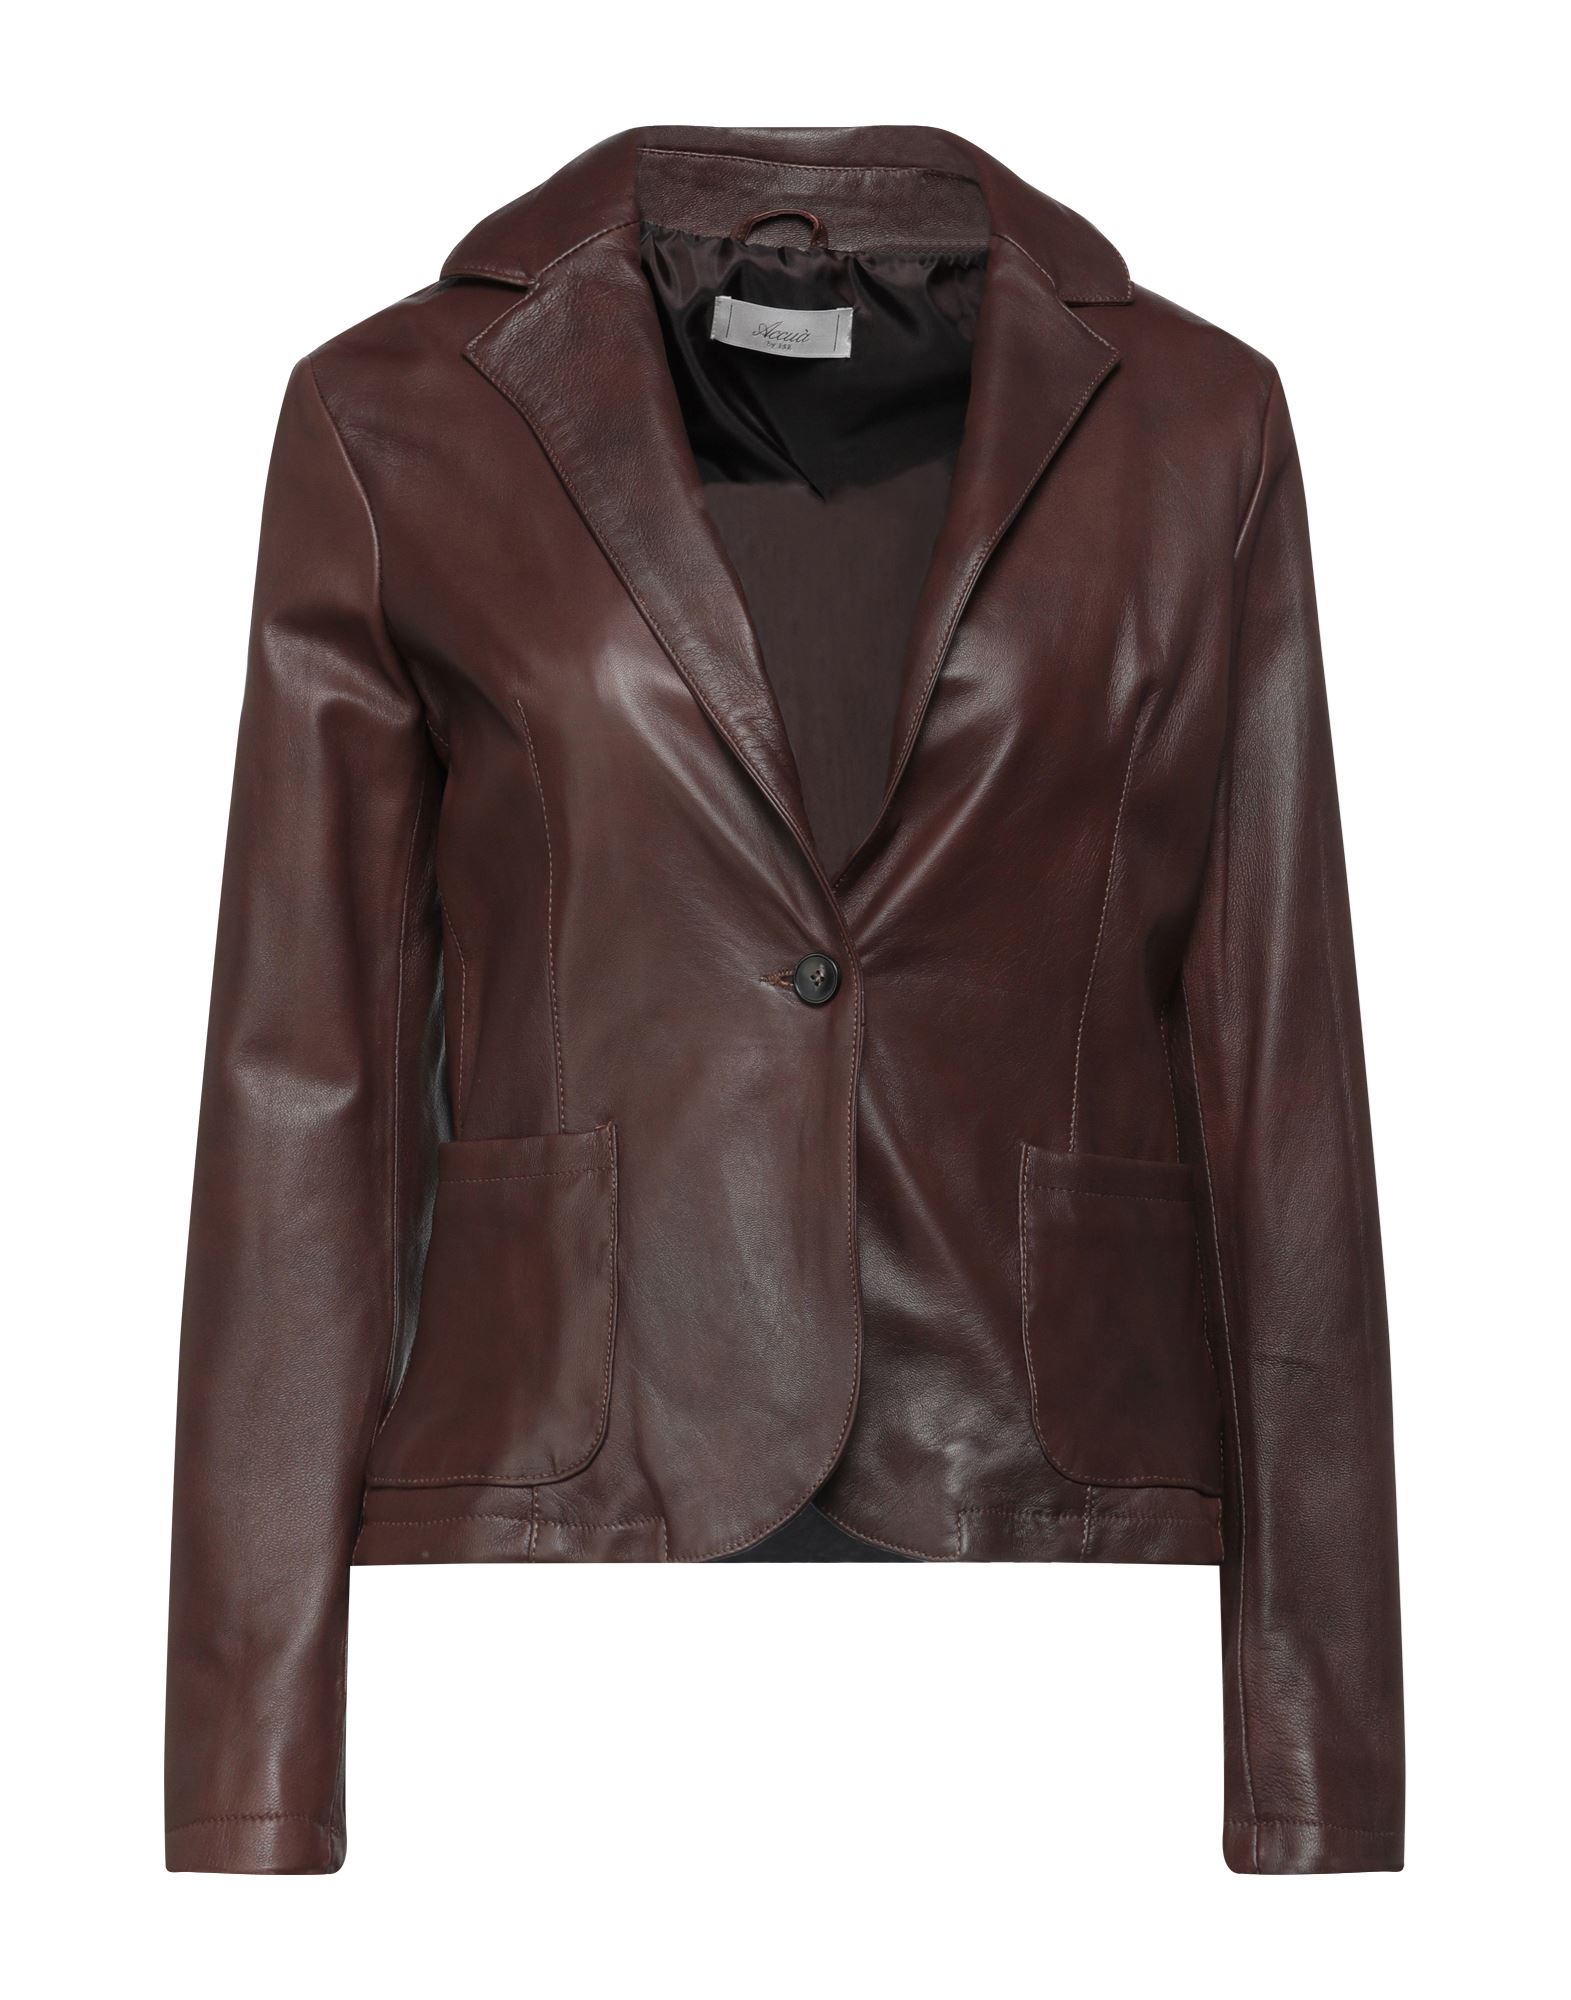 Accuà By Psr Woman Suit Jacket Dark Brown Size 6 Soft Leather